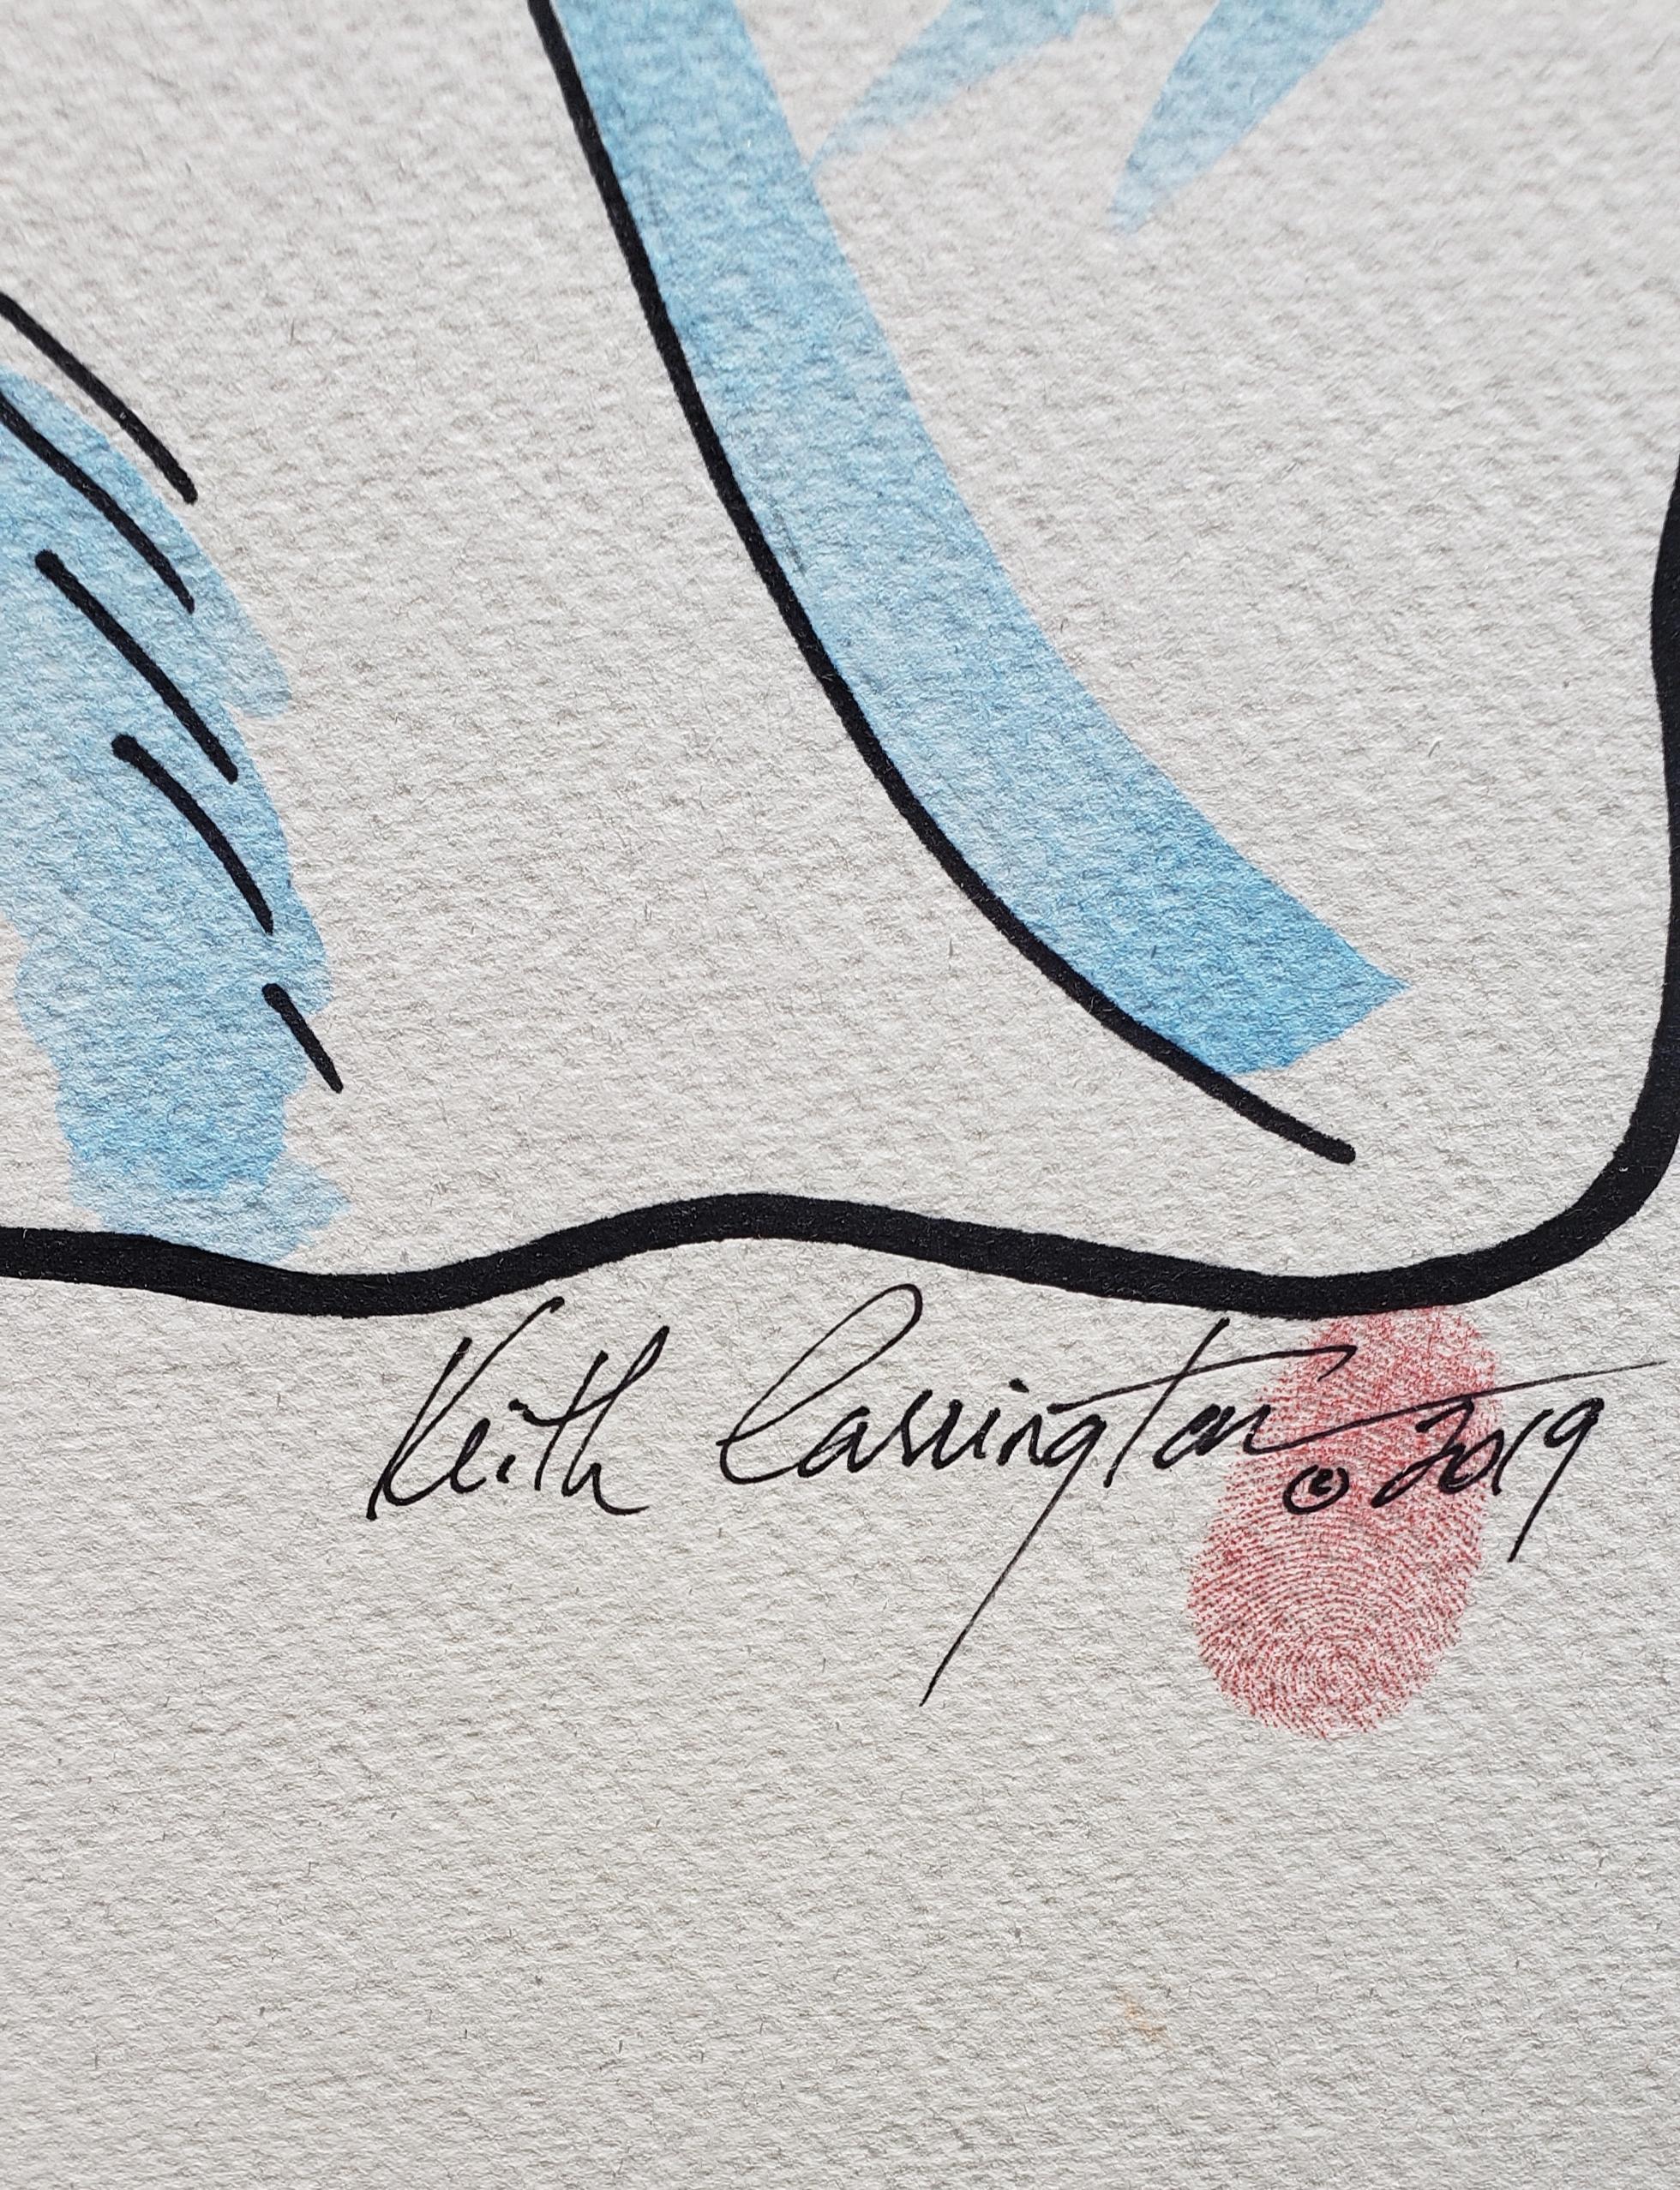 Capri-Arbeiten auf Papier (Grau), Figurative Painting, von Keith Carrington